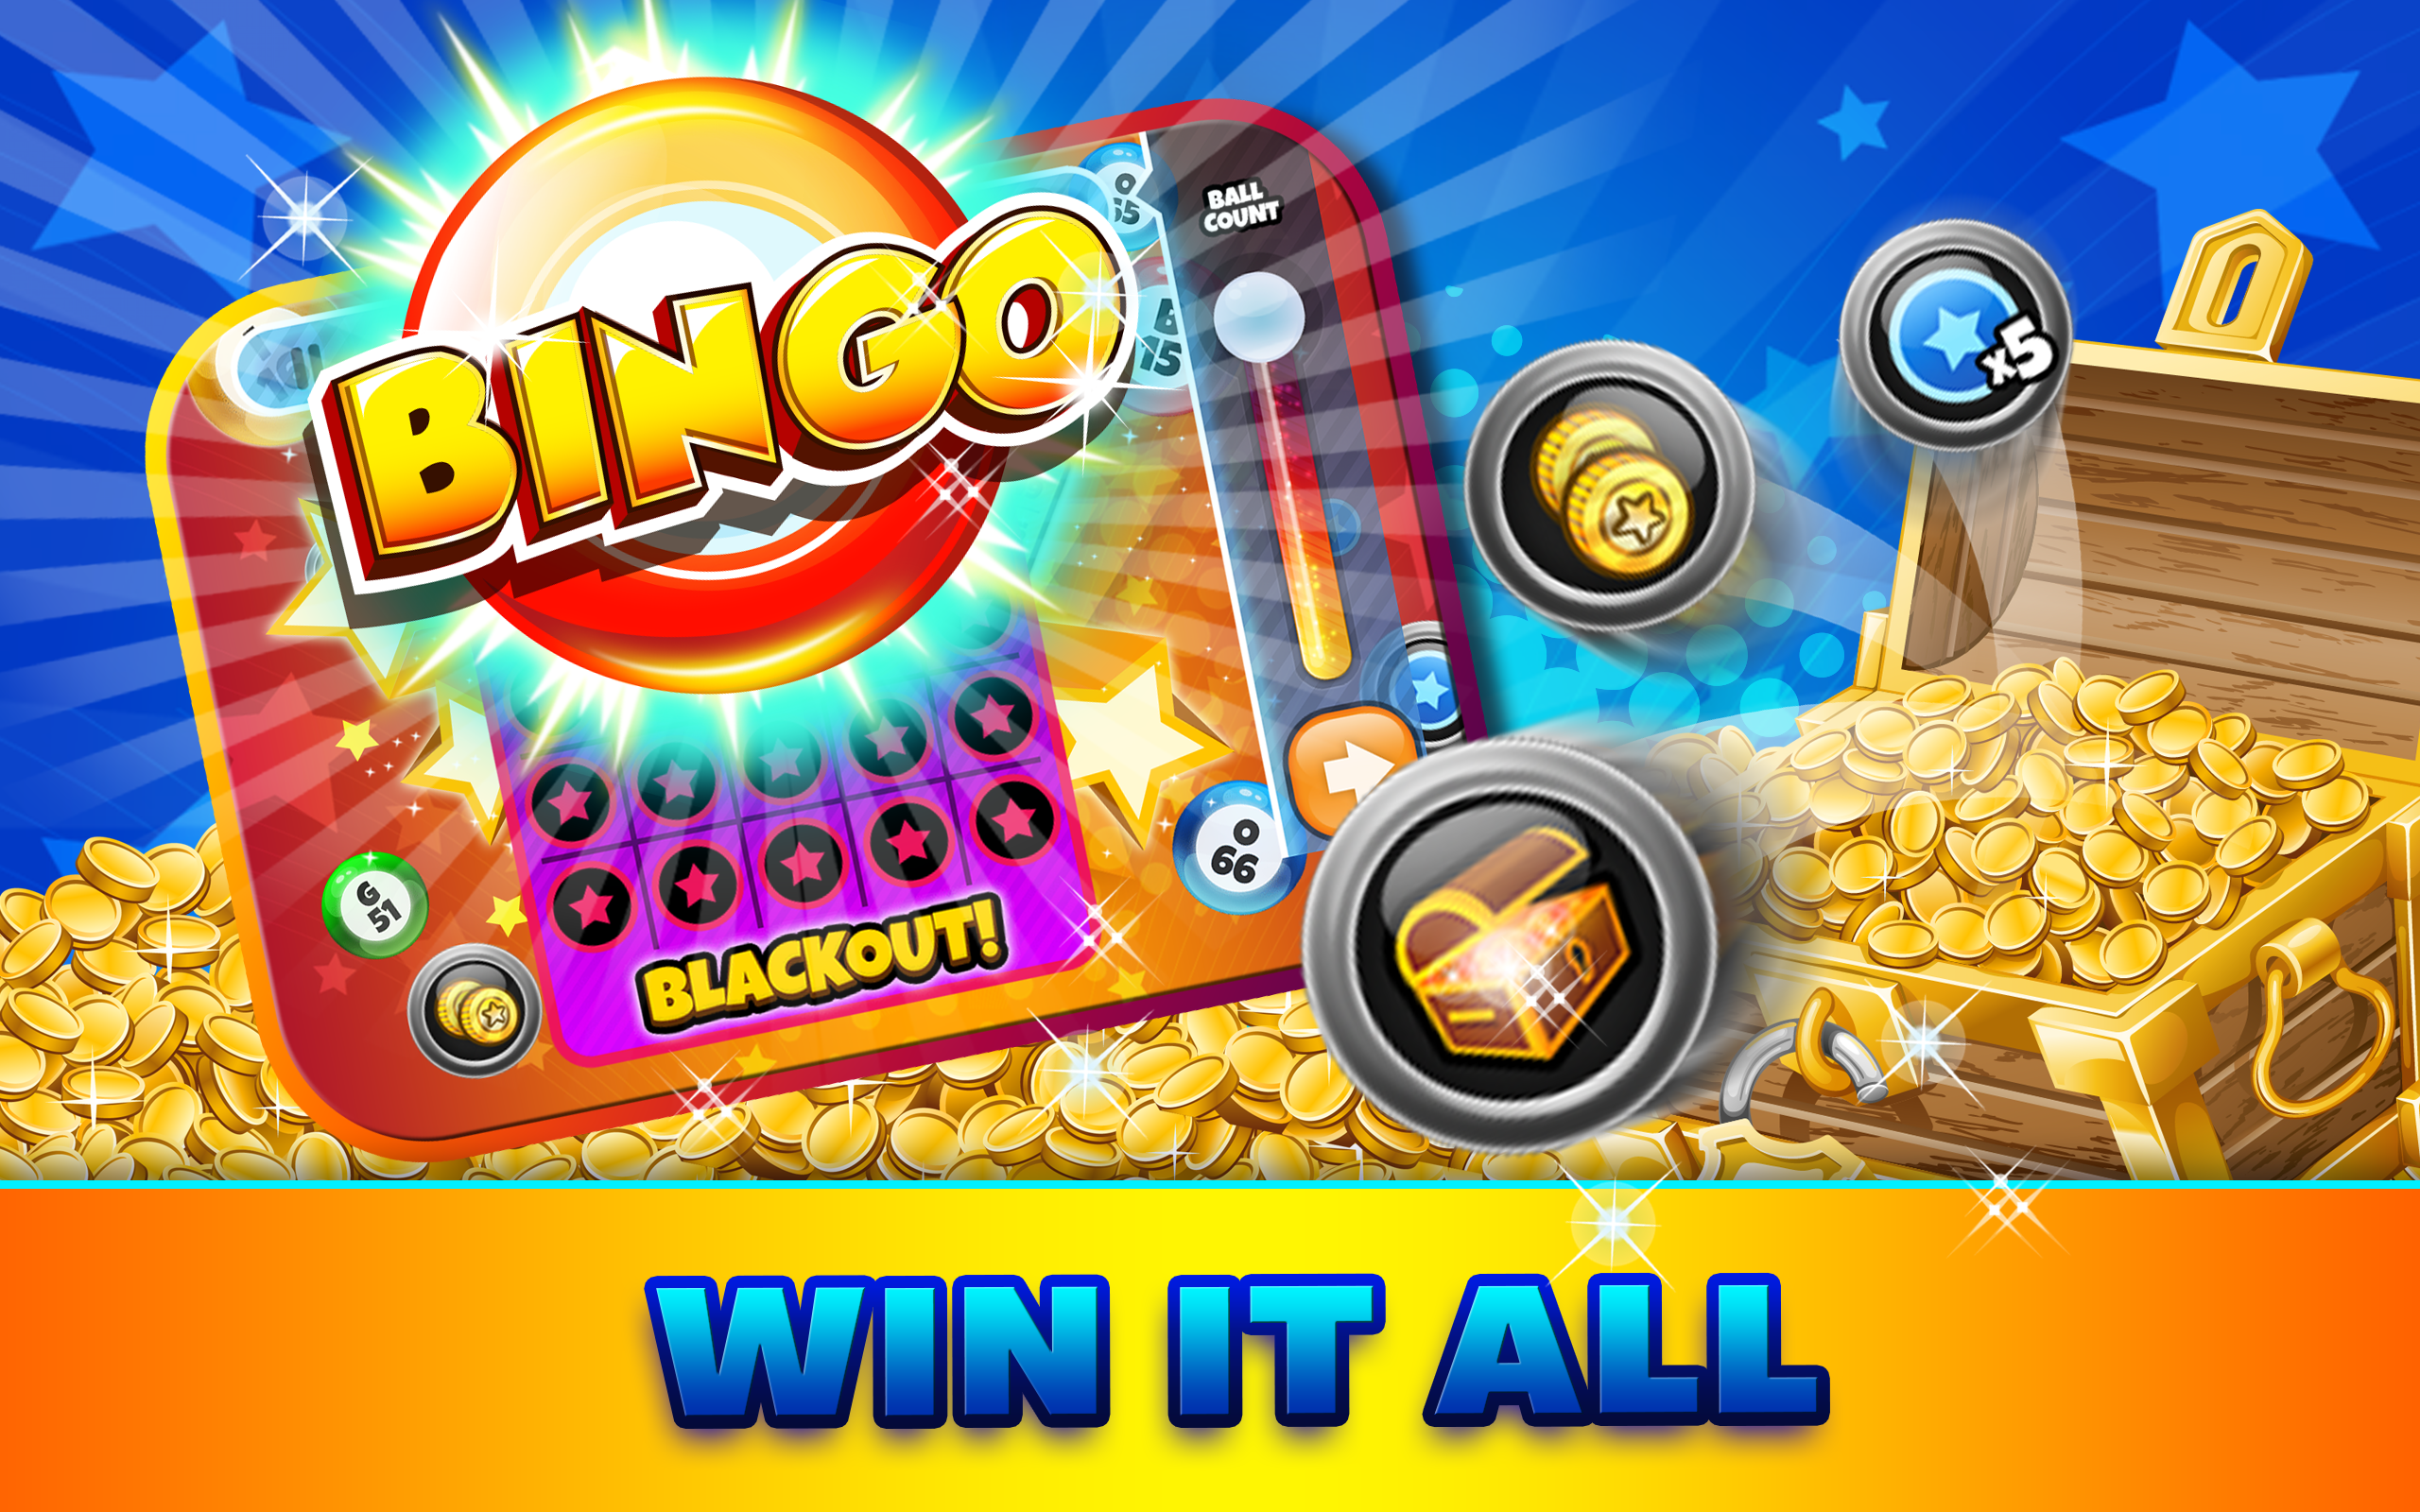 Cheques Bitcoins casino bingo gratis 854707